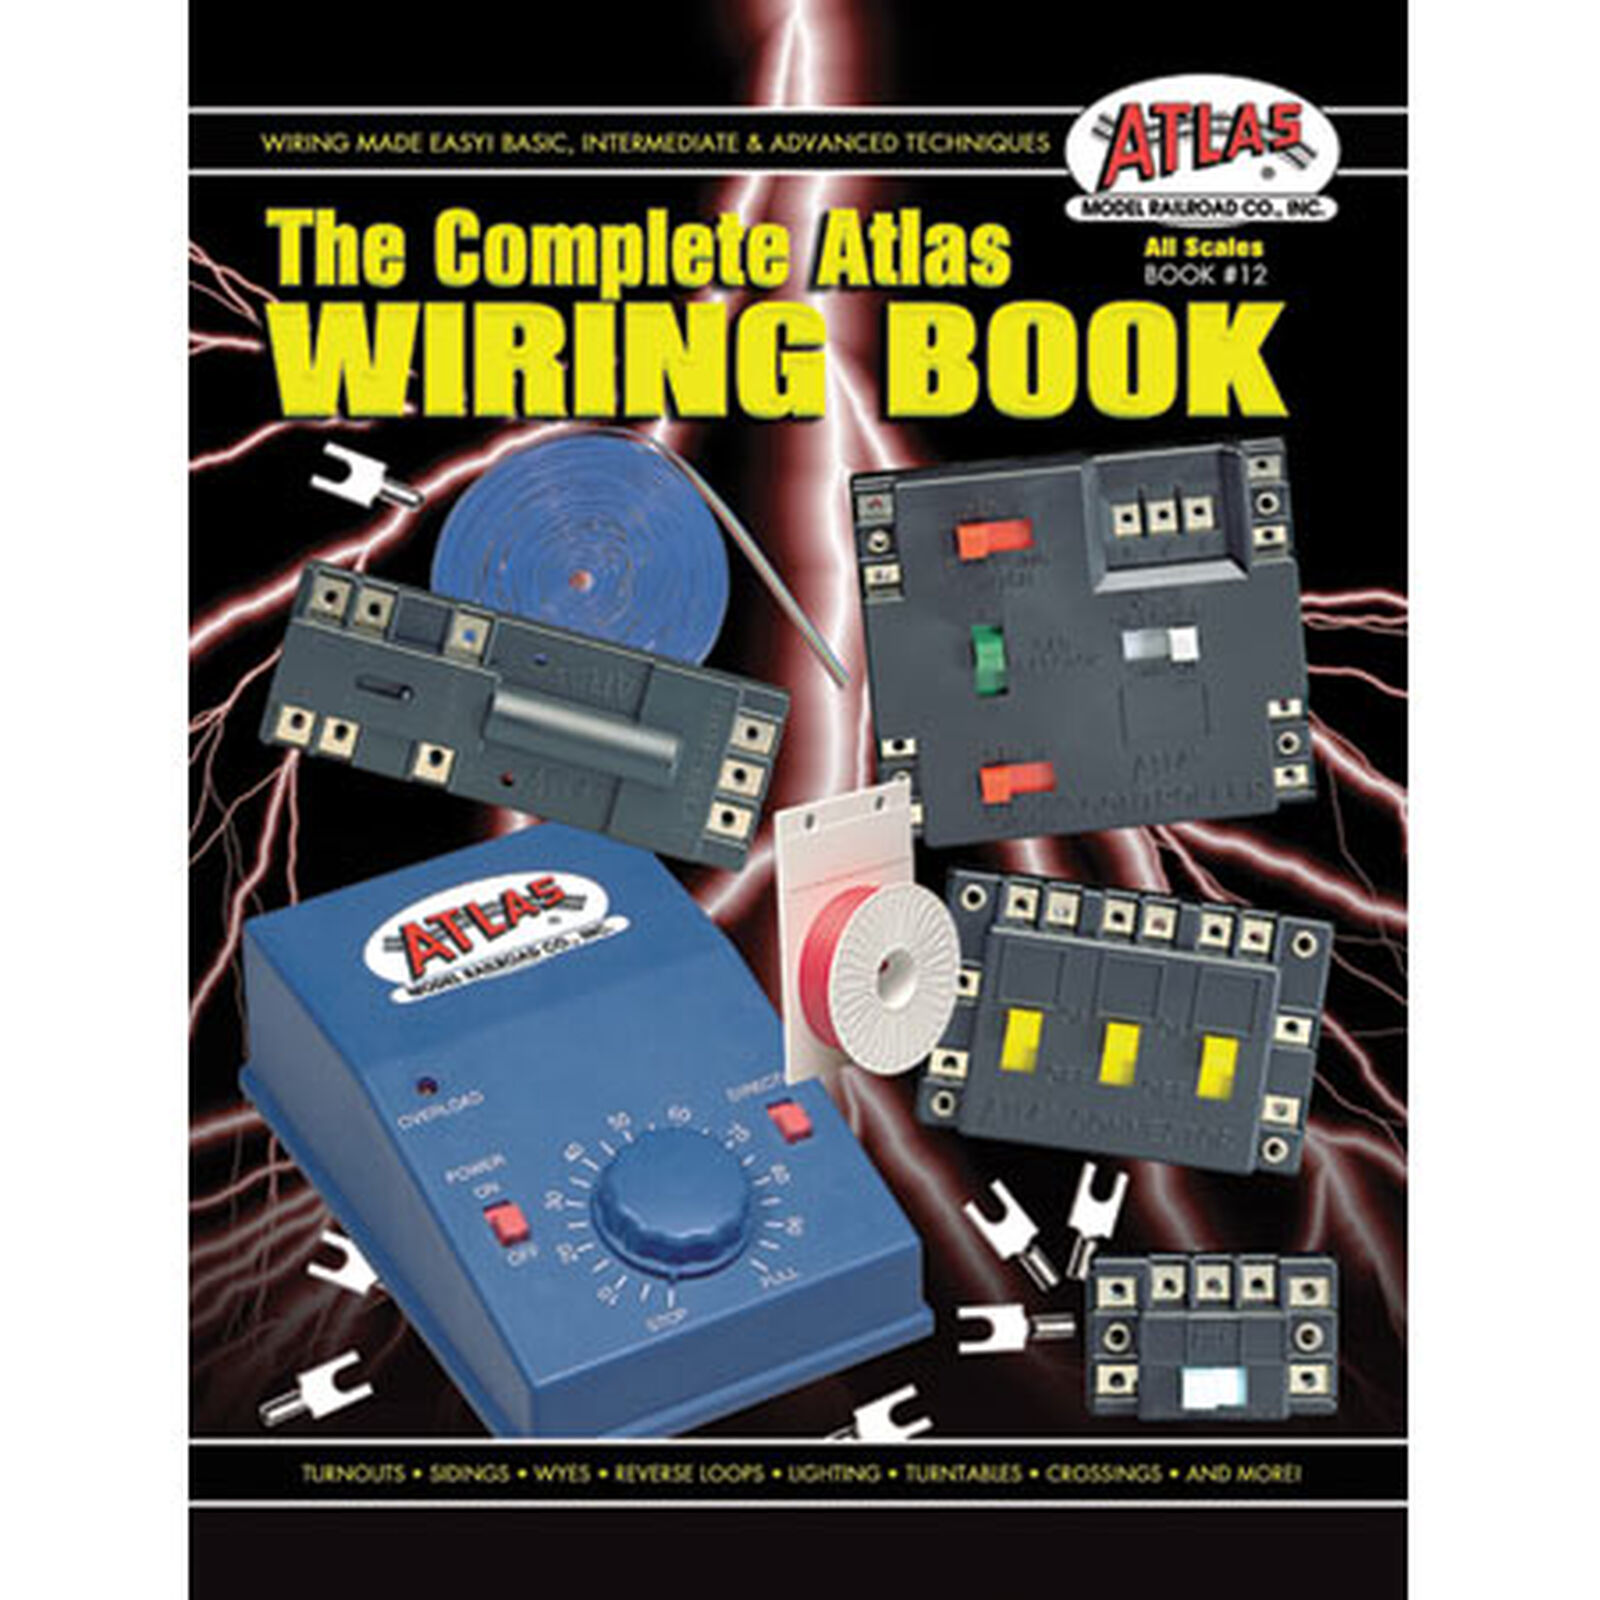 Complete Atlas Wiring Book